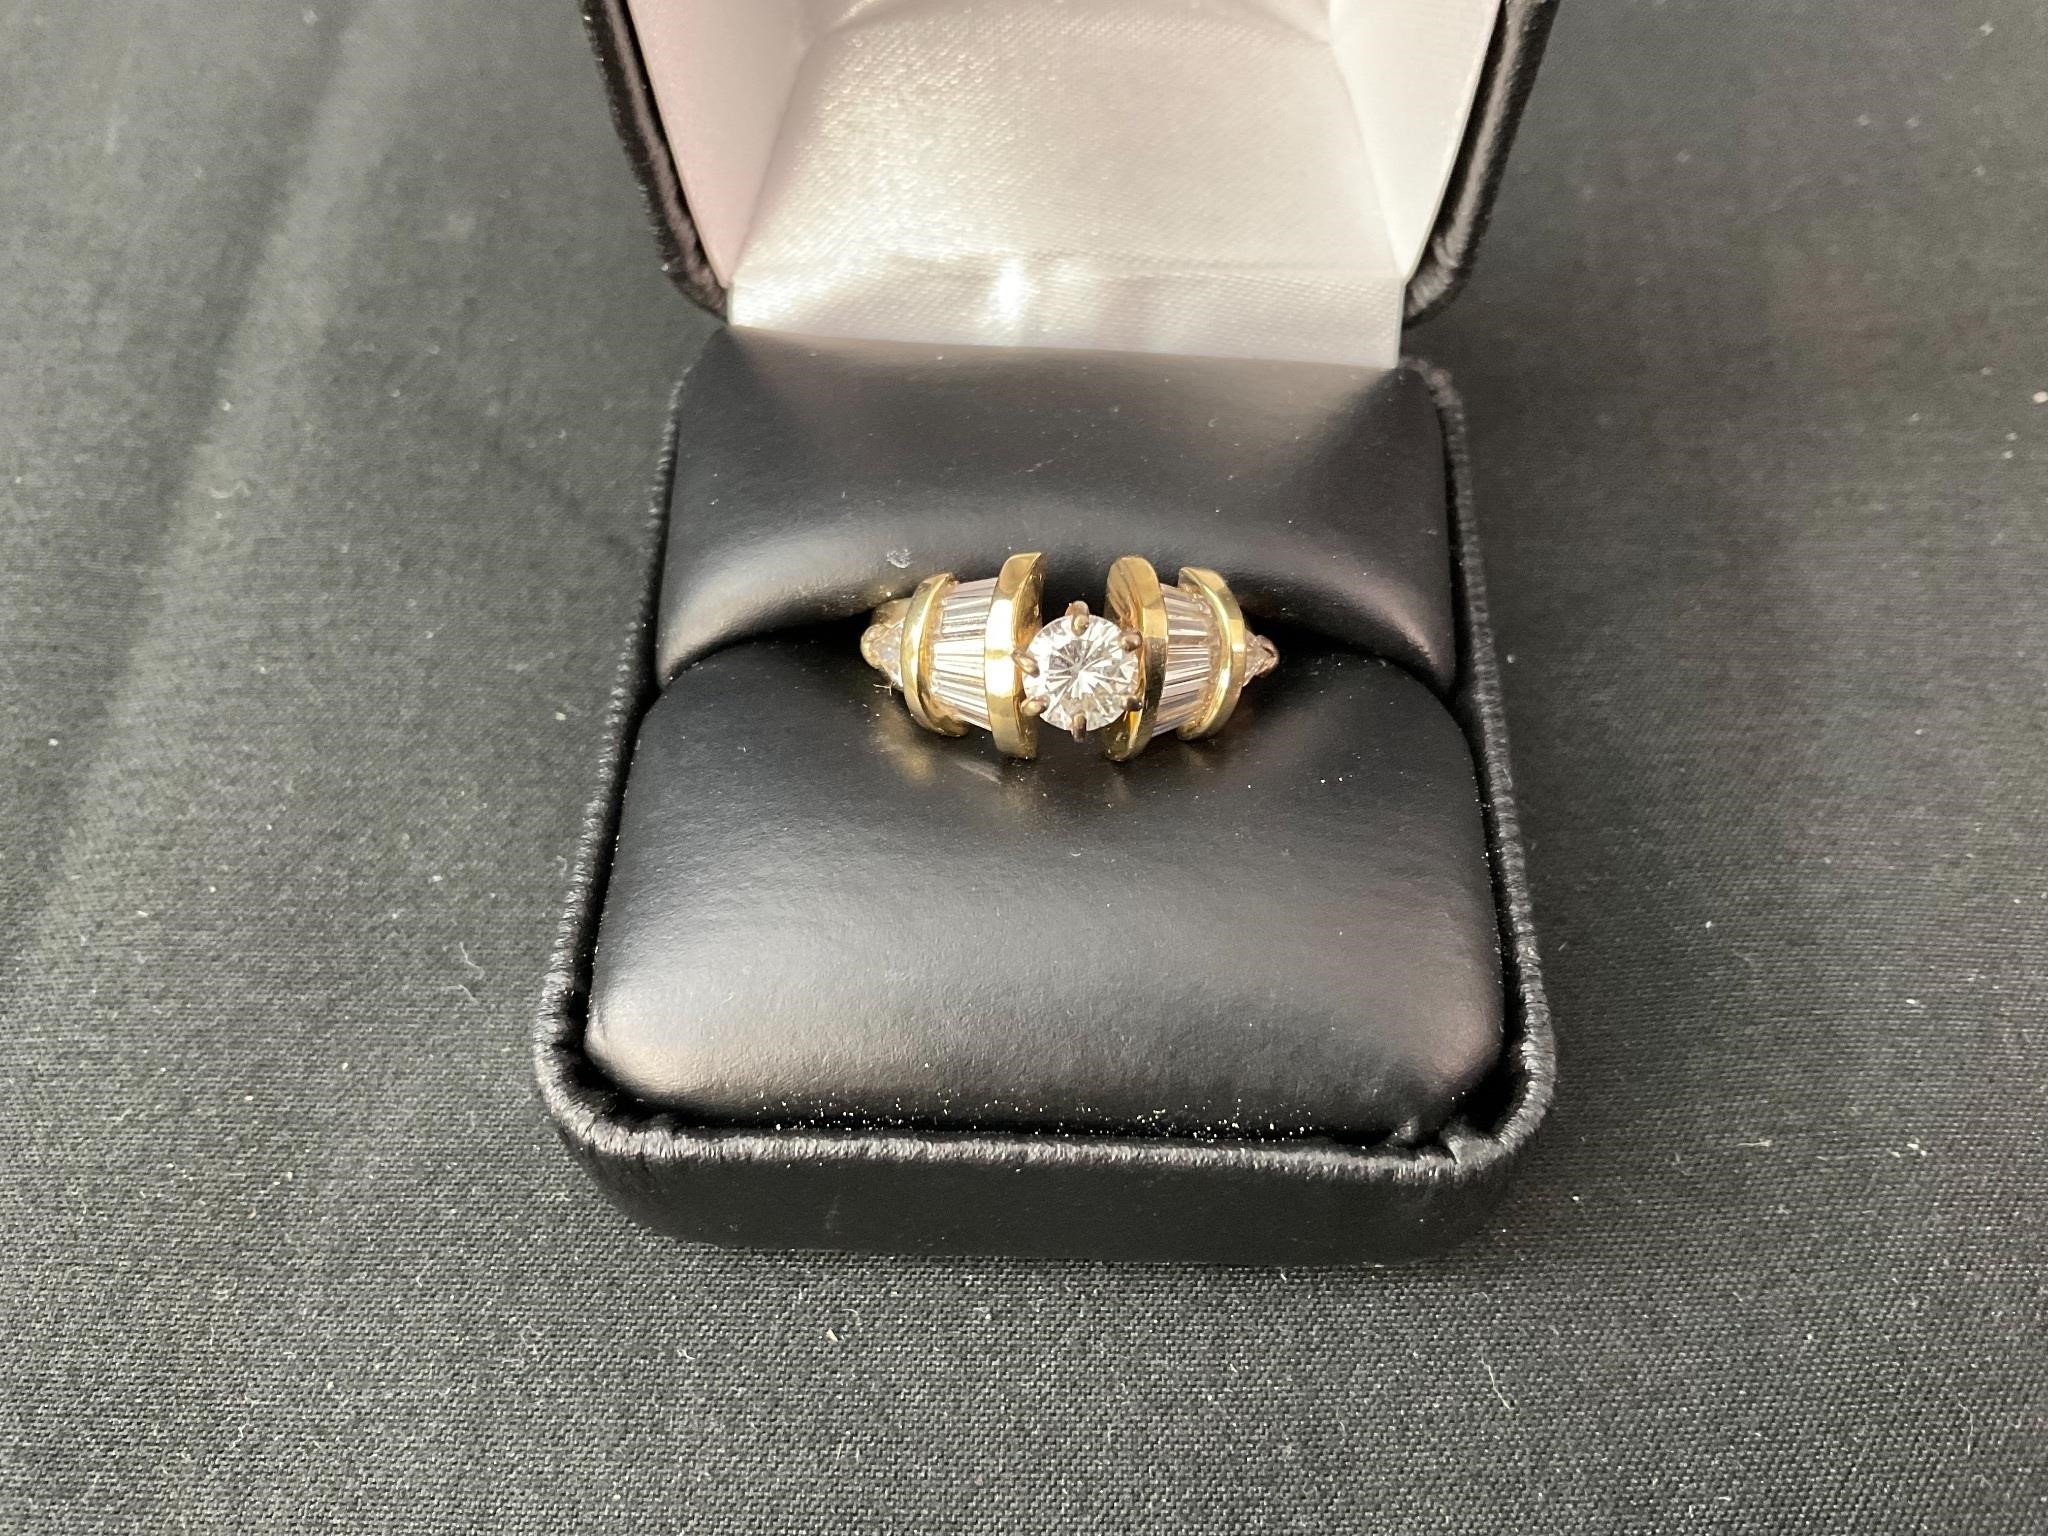 Stunning 14k Gold & Diamond Ring